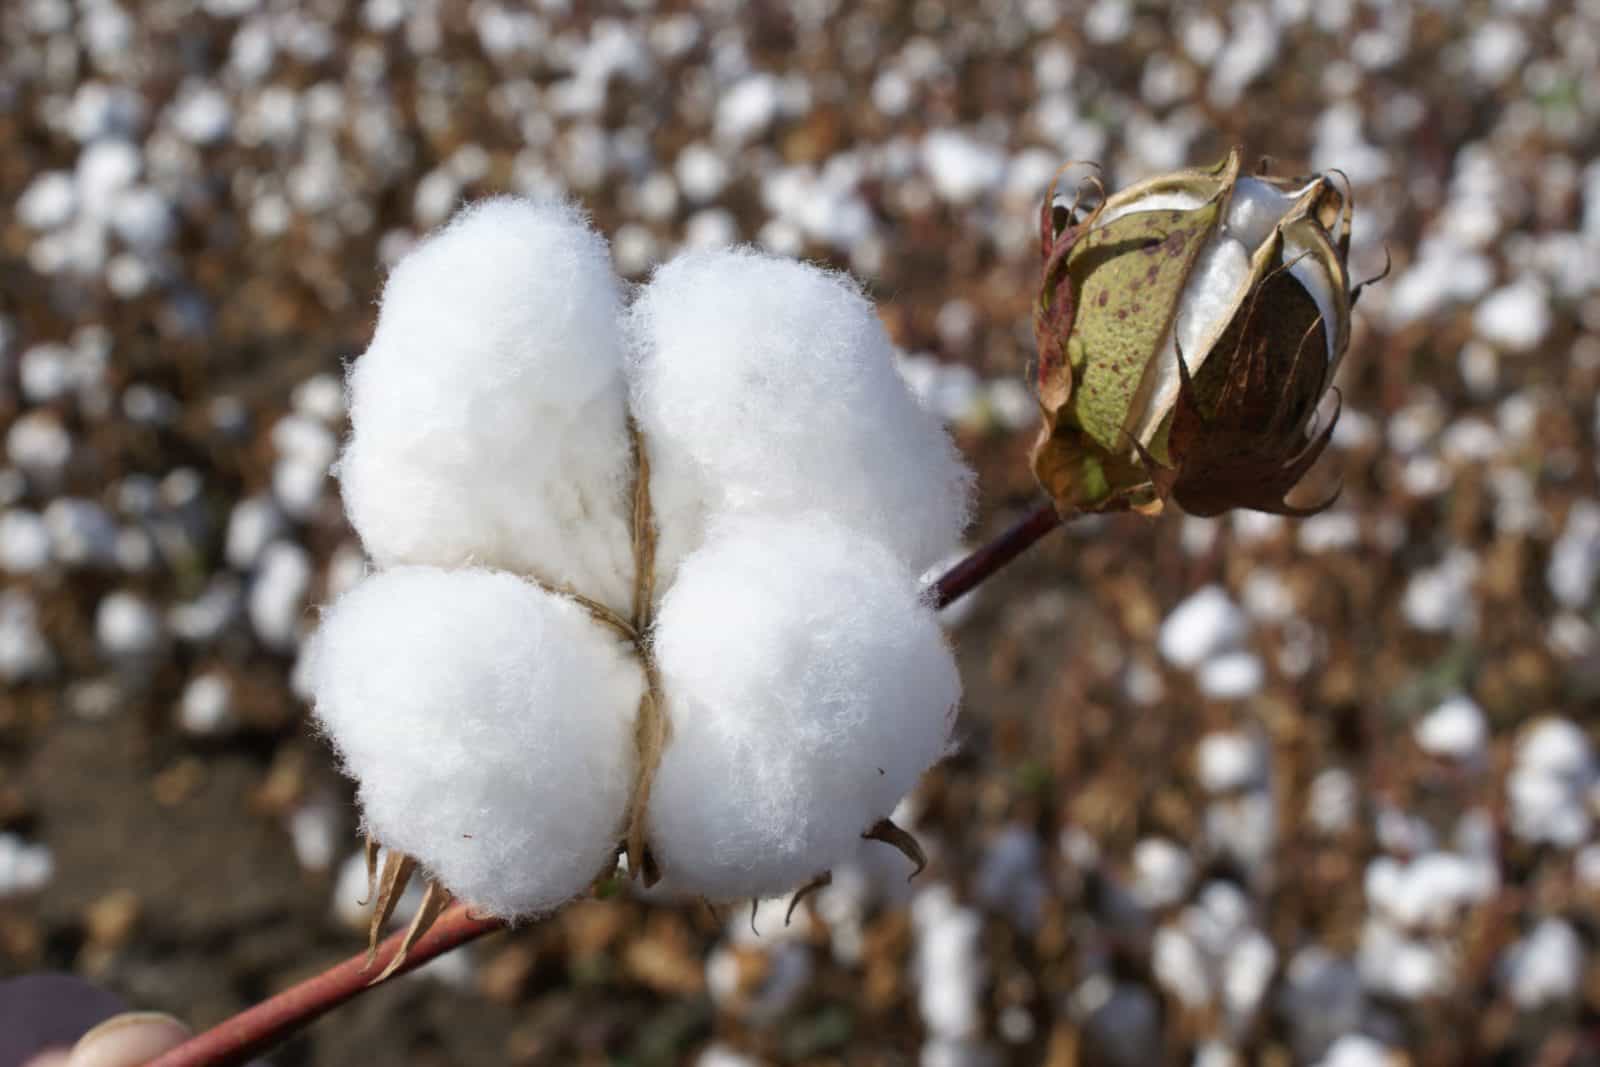 Cotton Farming, Goondiwindi region